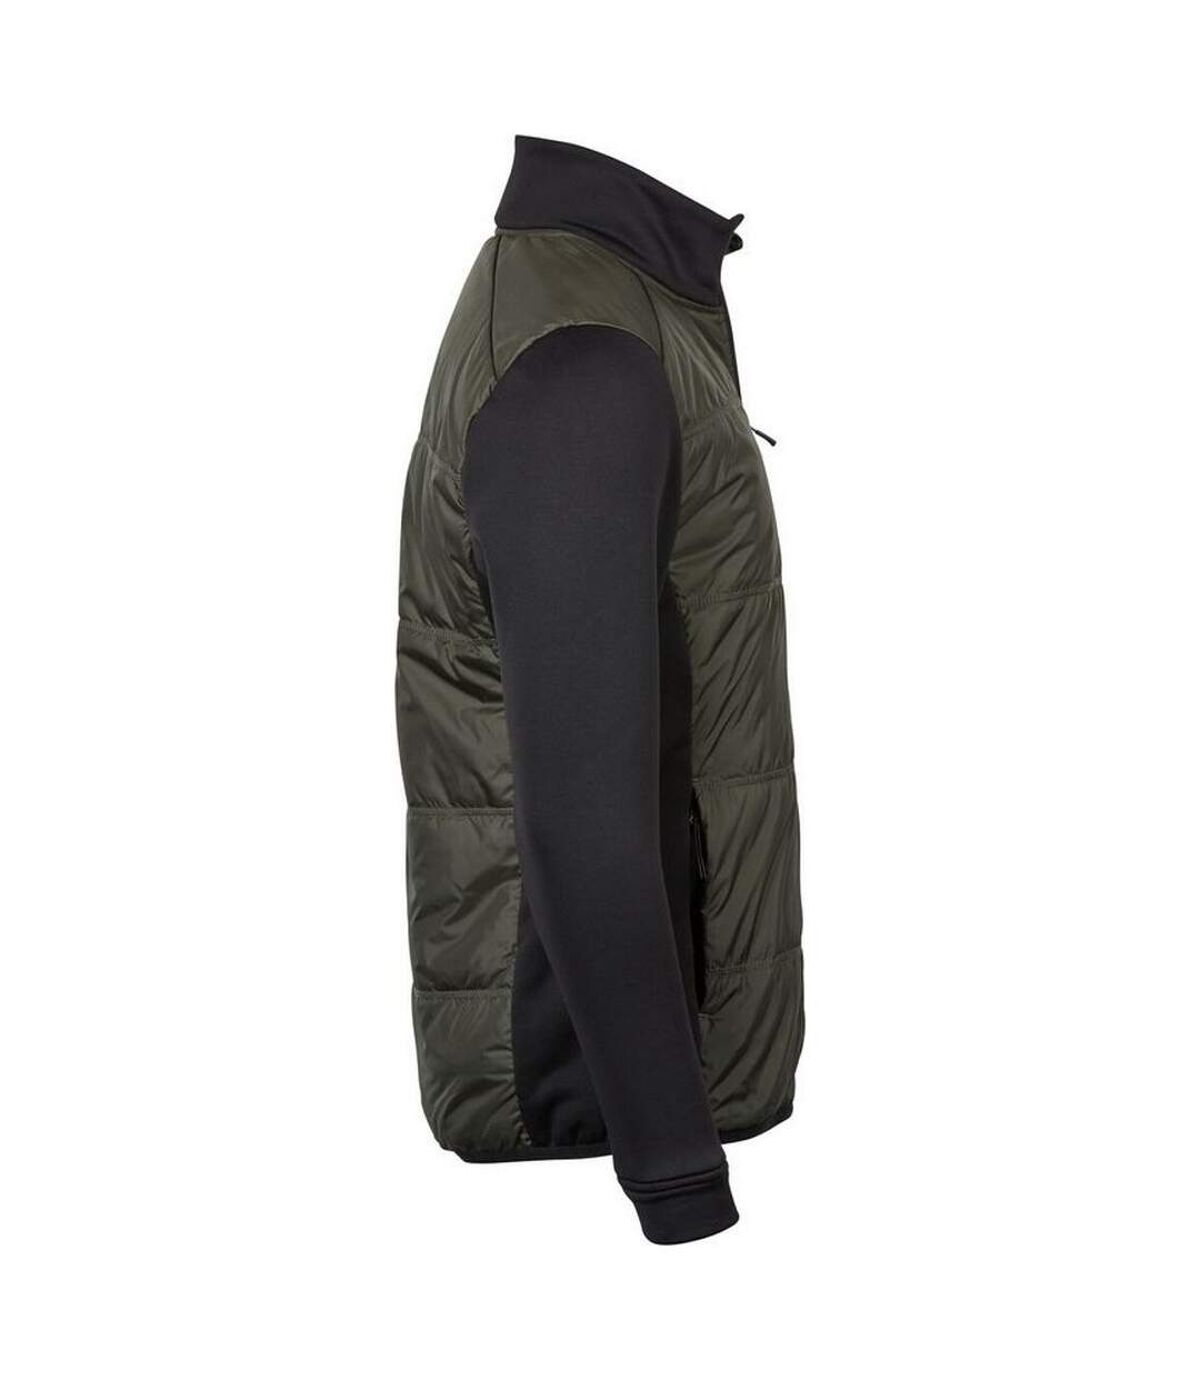 Tee Jays Mens Hybrid Stretch Jacket (Deep Green/Black)